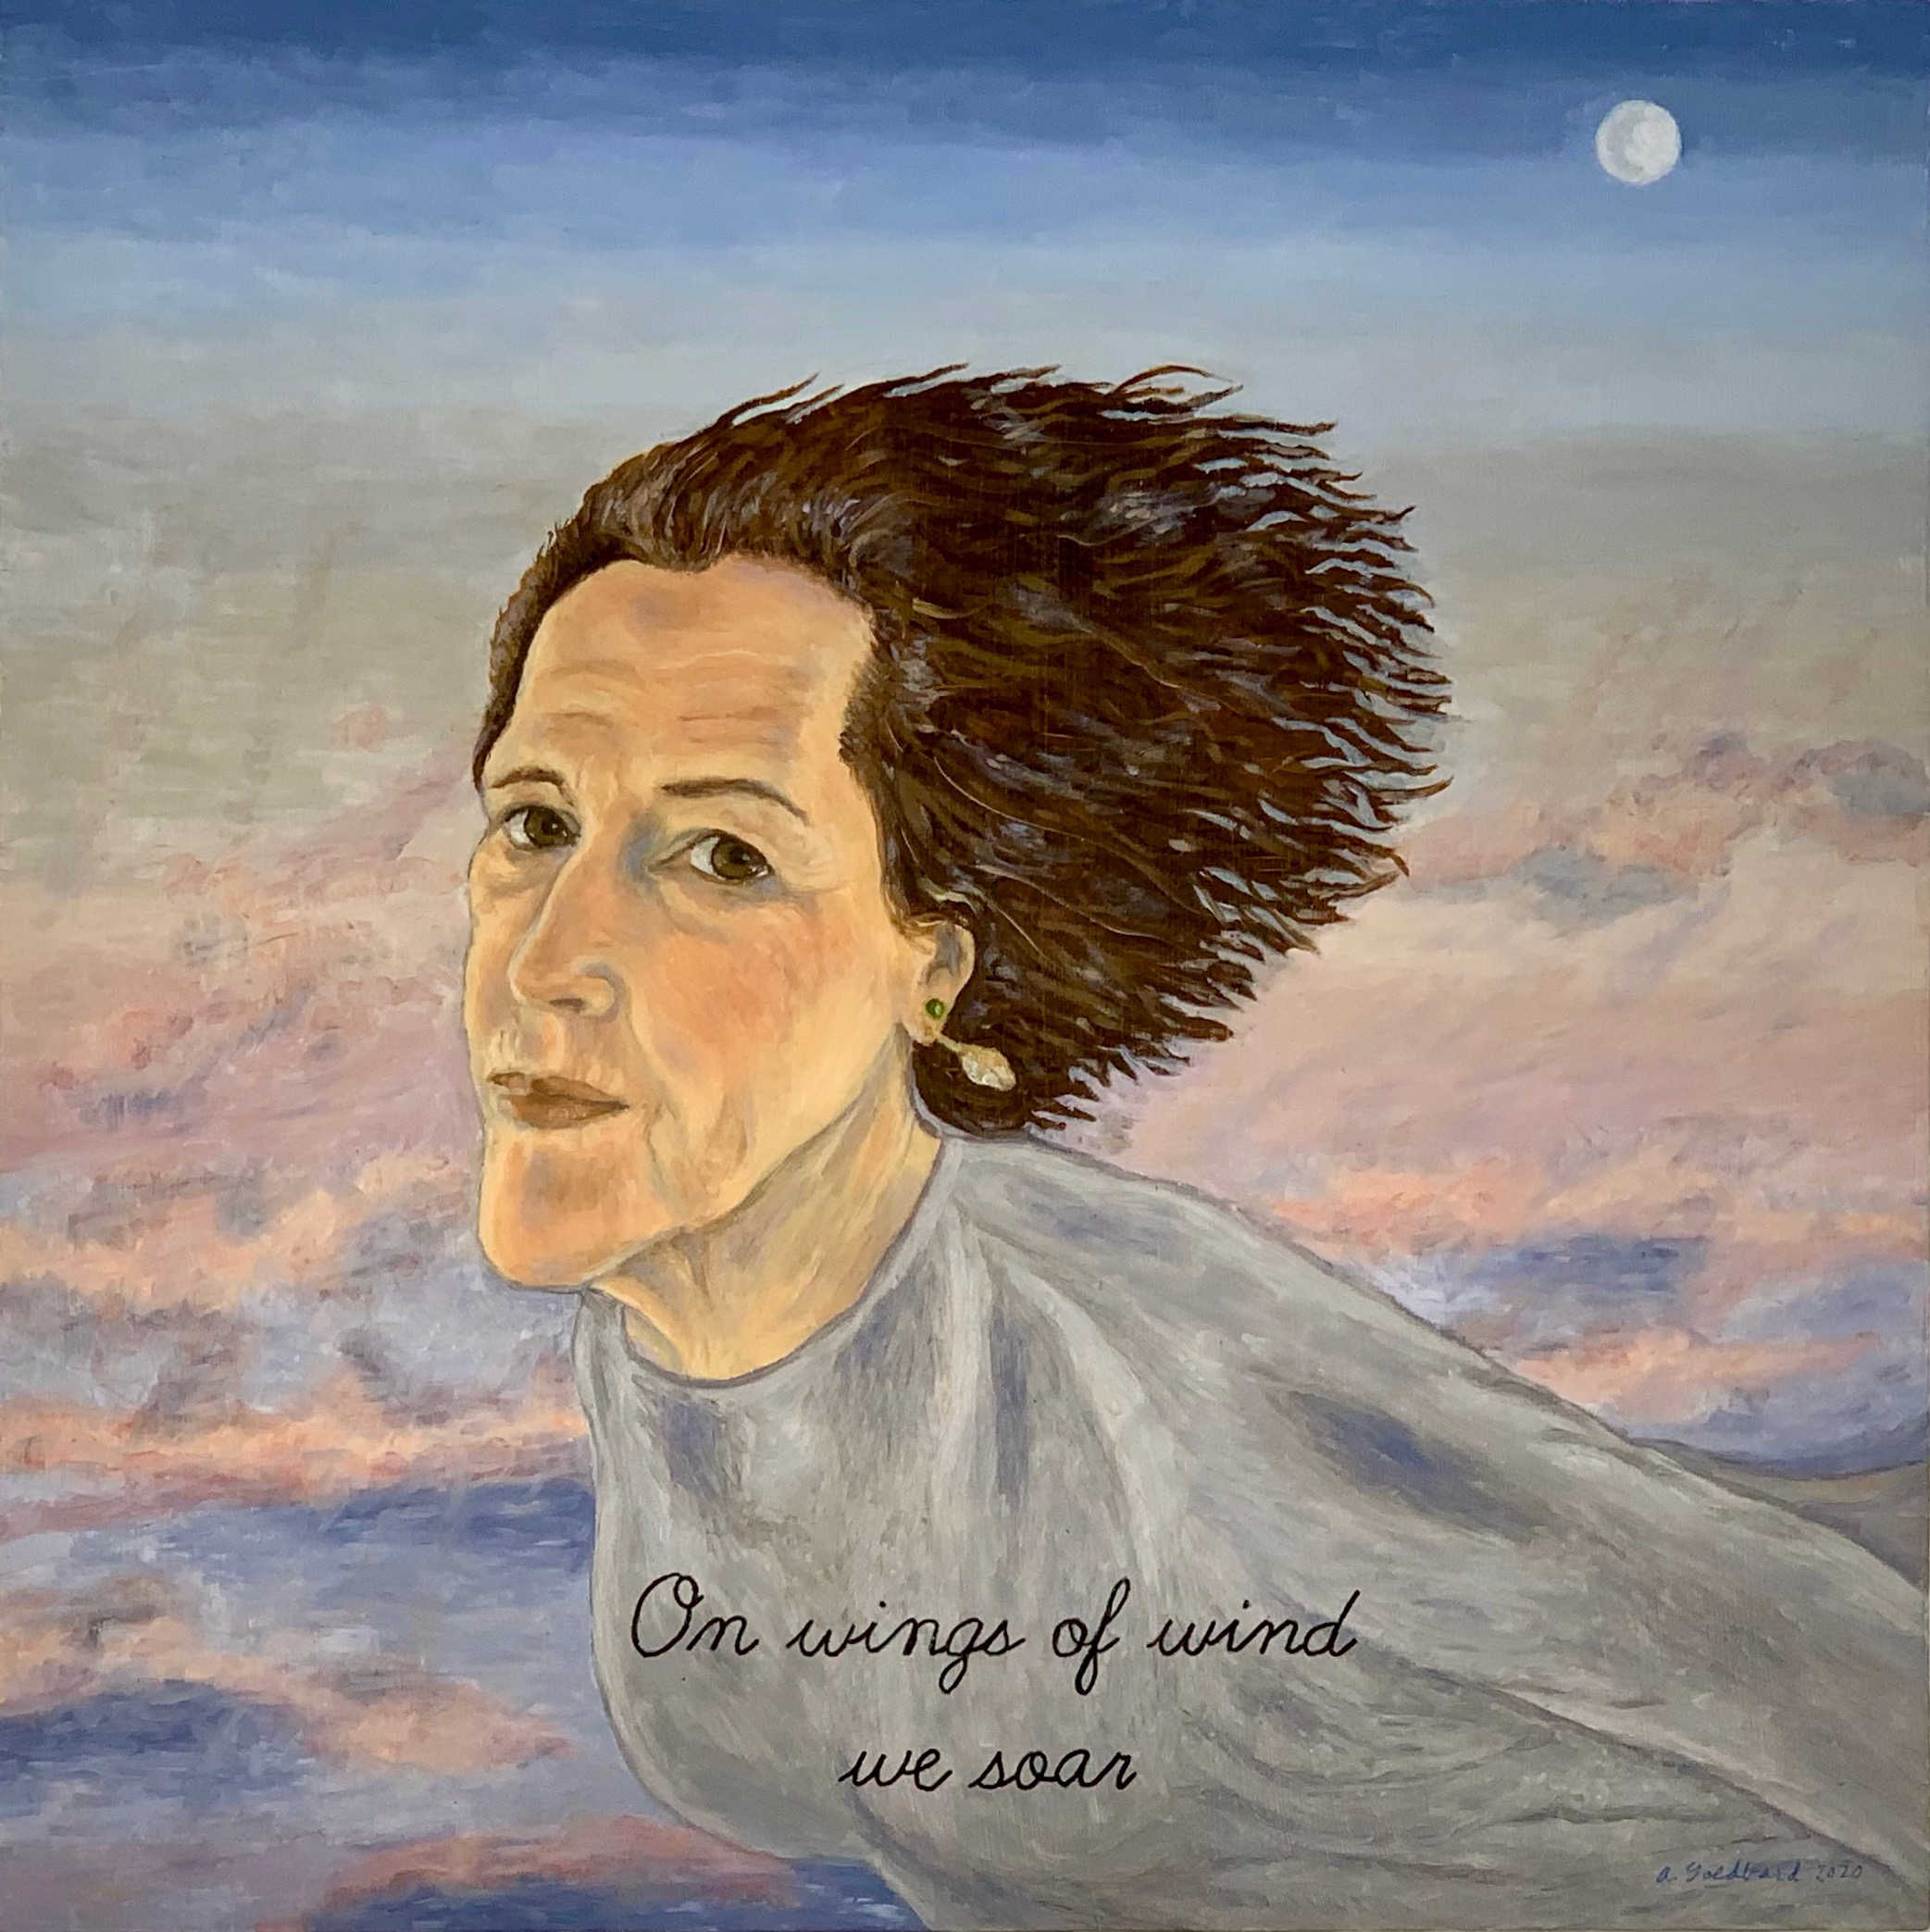 Gaia and Shekhina Speak: On Wings of Wind, 2019, oil on panel, 24x24